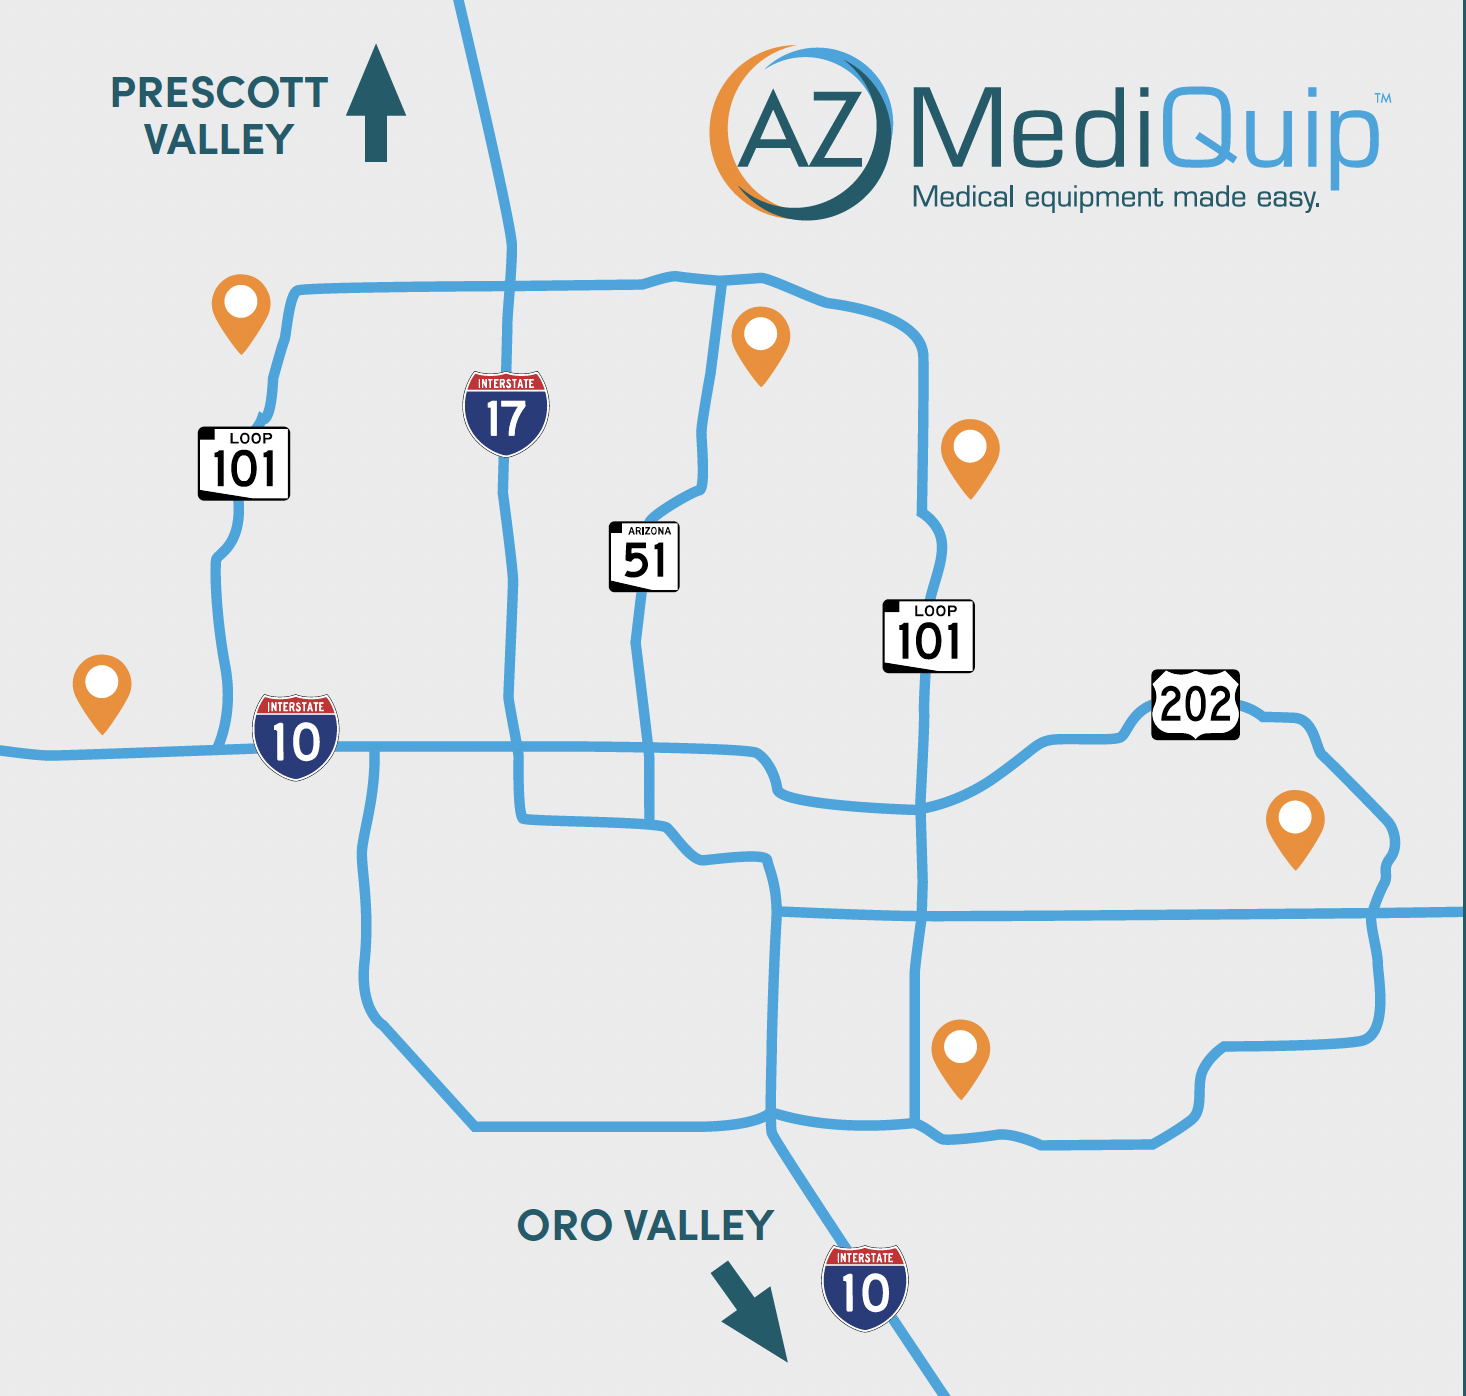 Experience AZ MediQuip's showrooms in Scottsdale, Goodyear, Chandler, Mesa, Peoria, Phoenix, Oro Valley, and Prescott Valley.